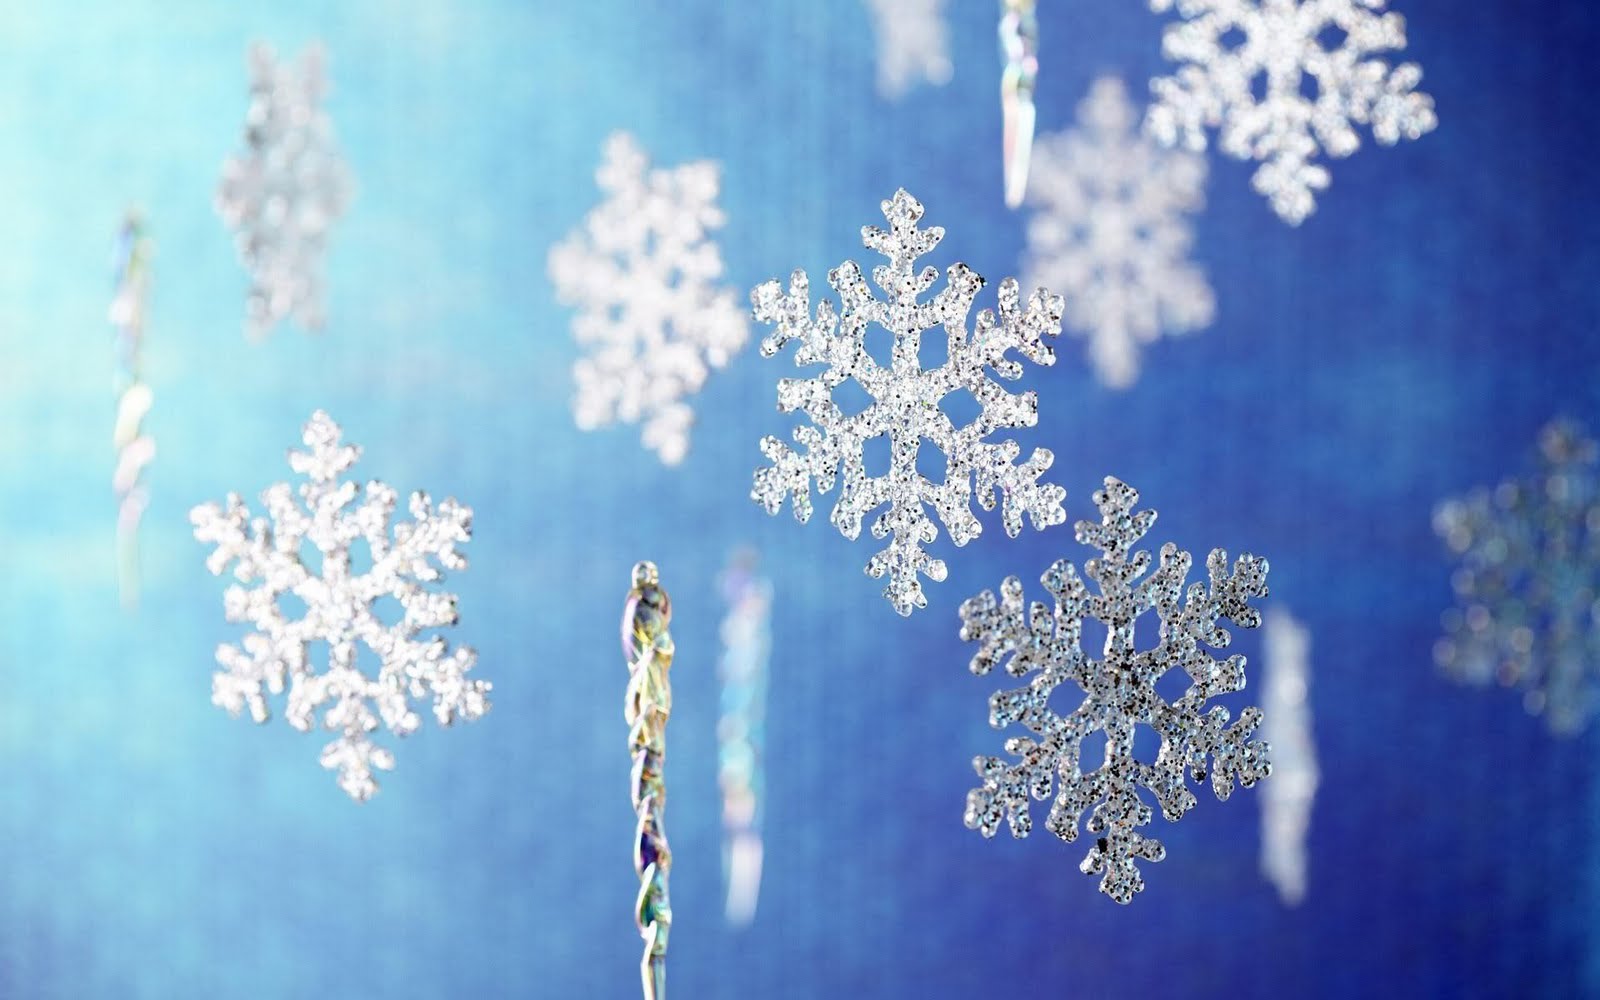  3d silver snowflakes falling desktop background hdhq wallpaper